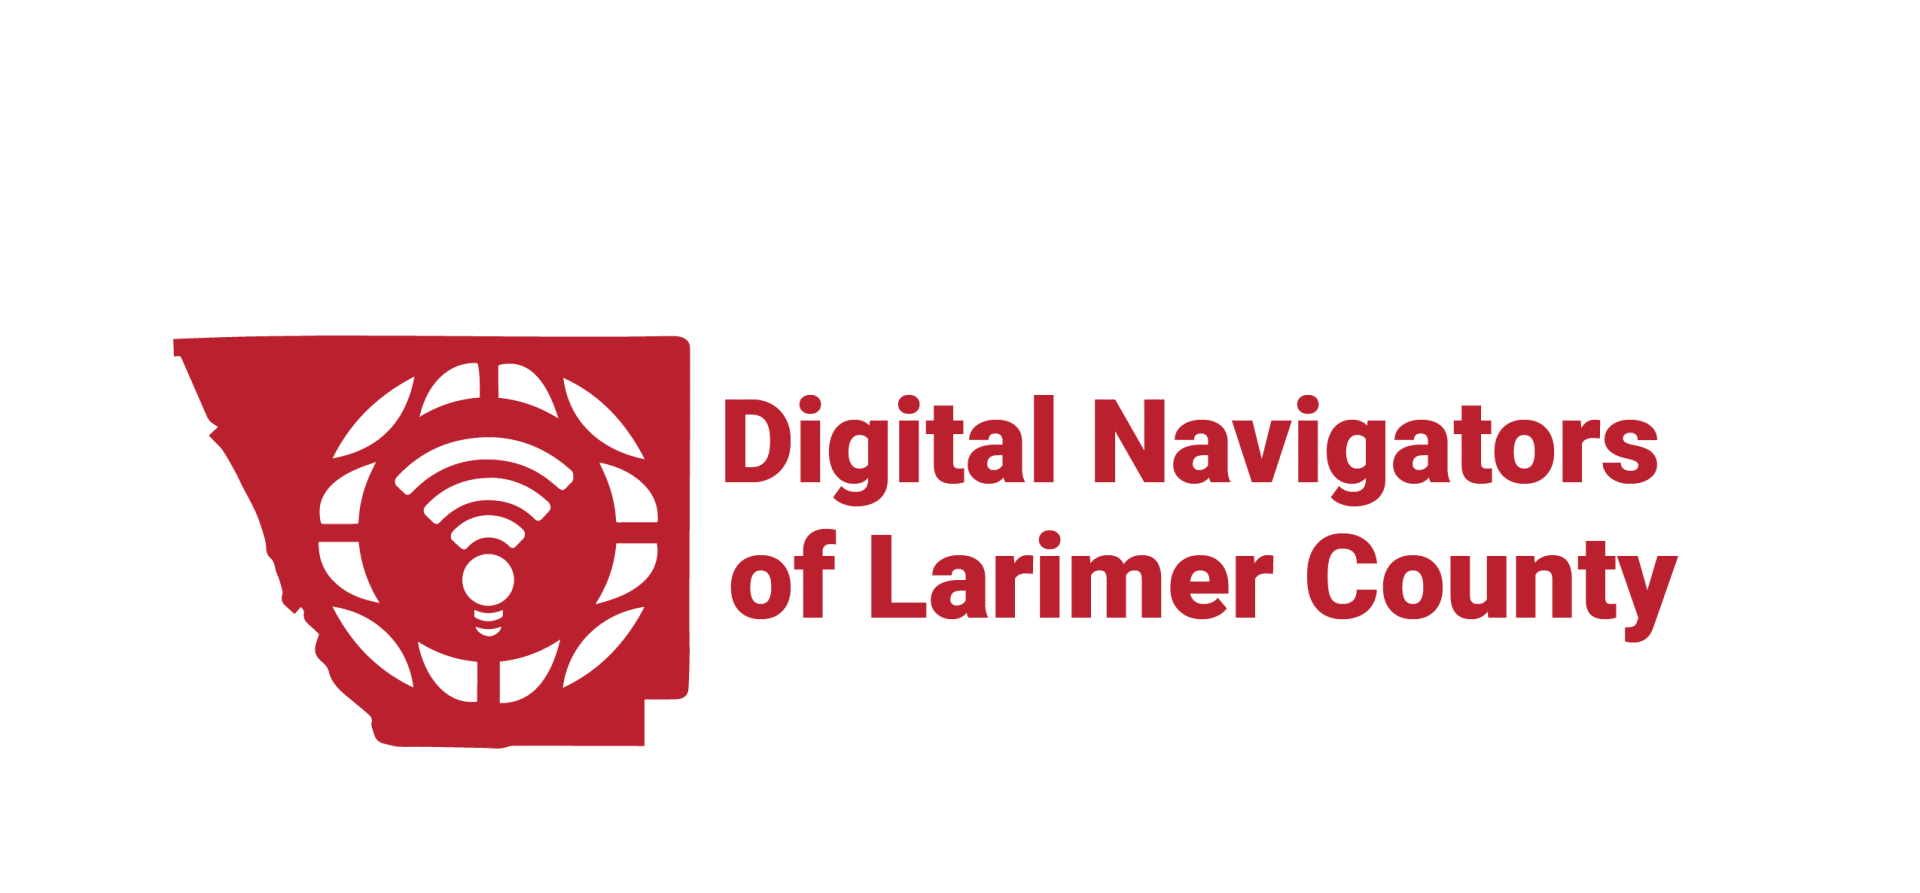 Digital Navigators of Larimer County